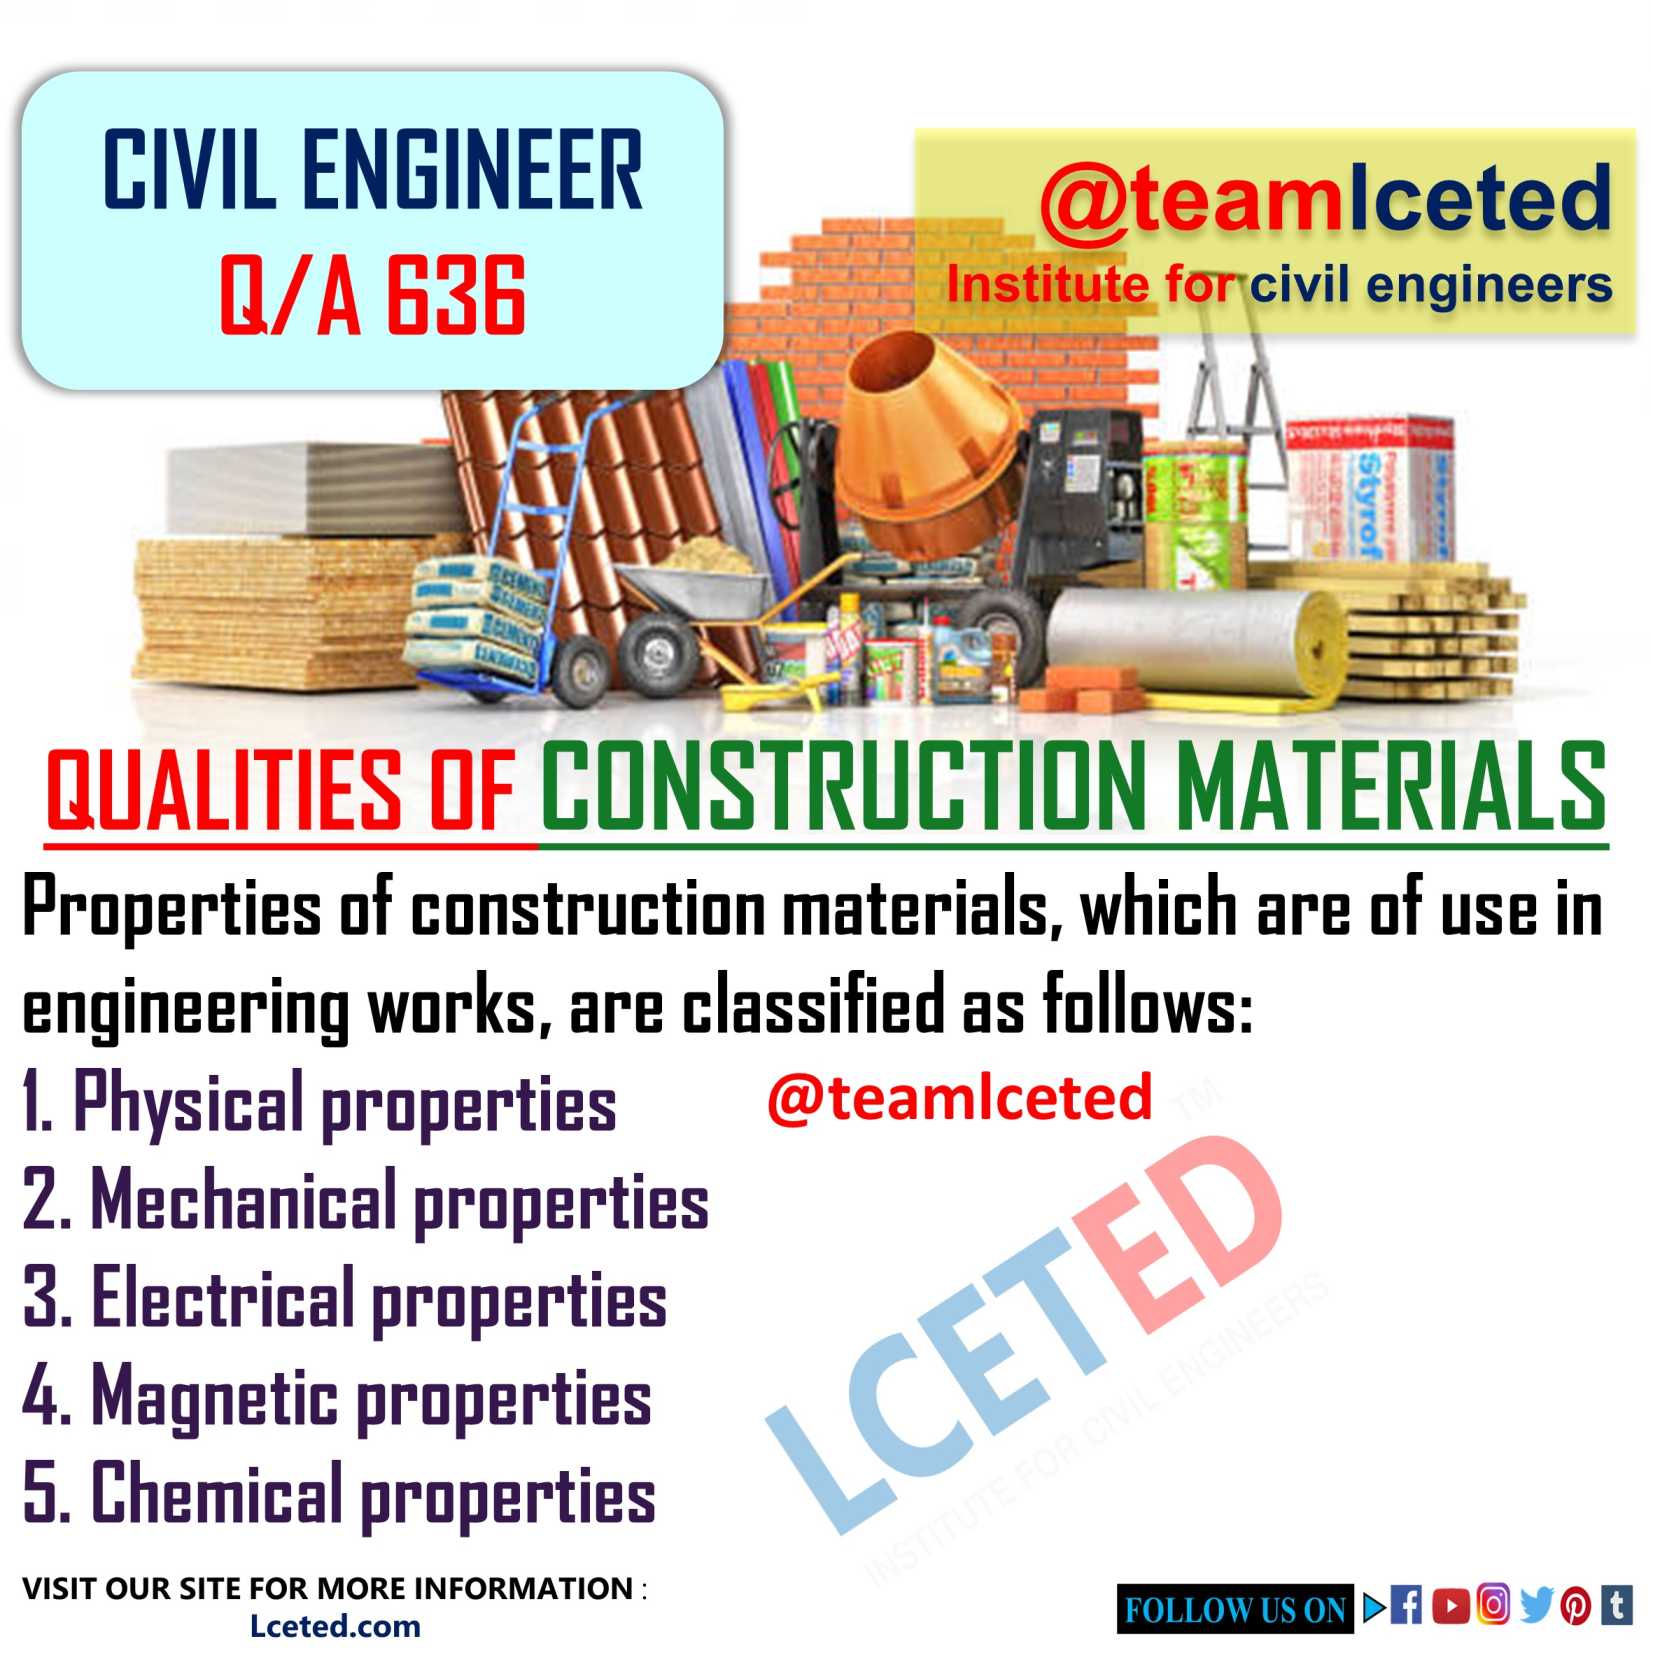 QUALITIES OF CONSTRUCTION MATERIALS